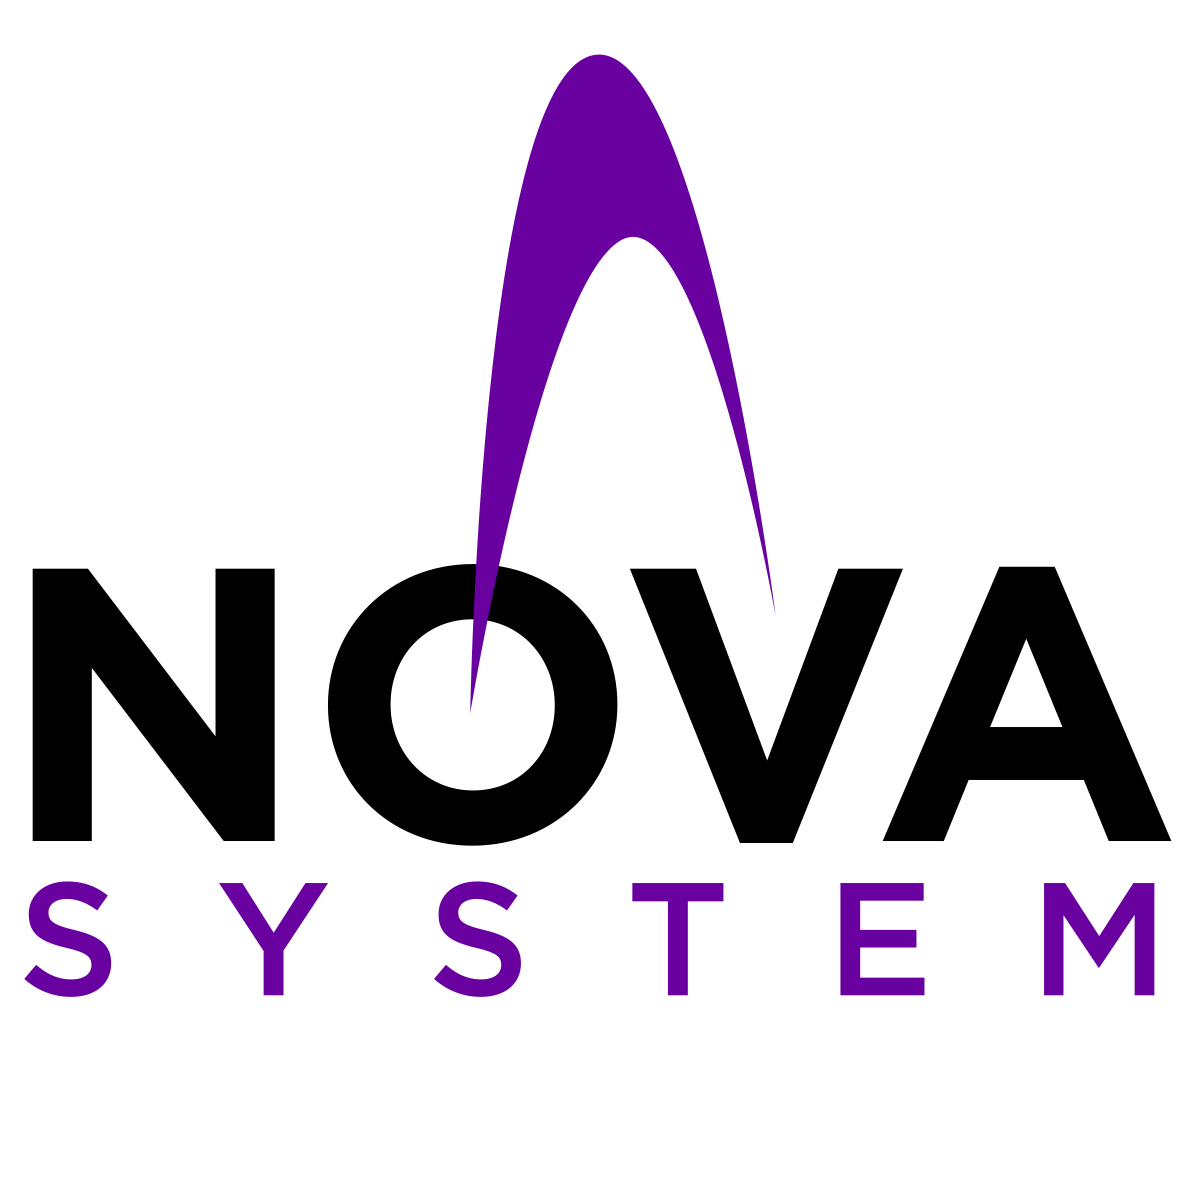 Nova System